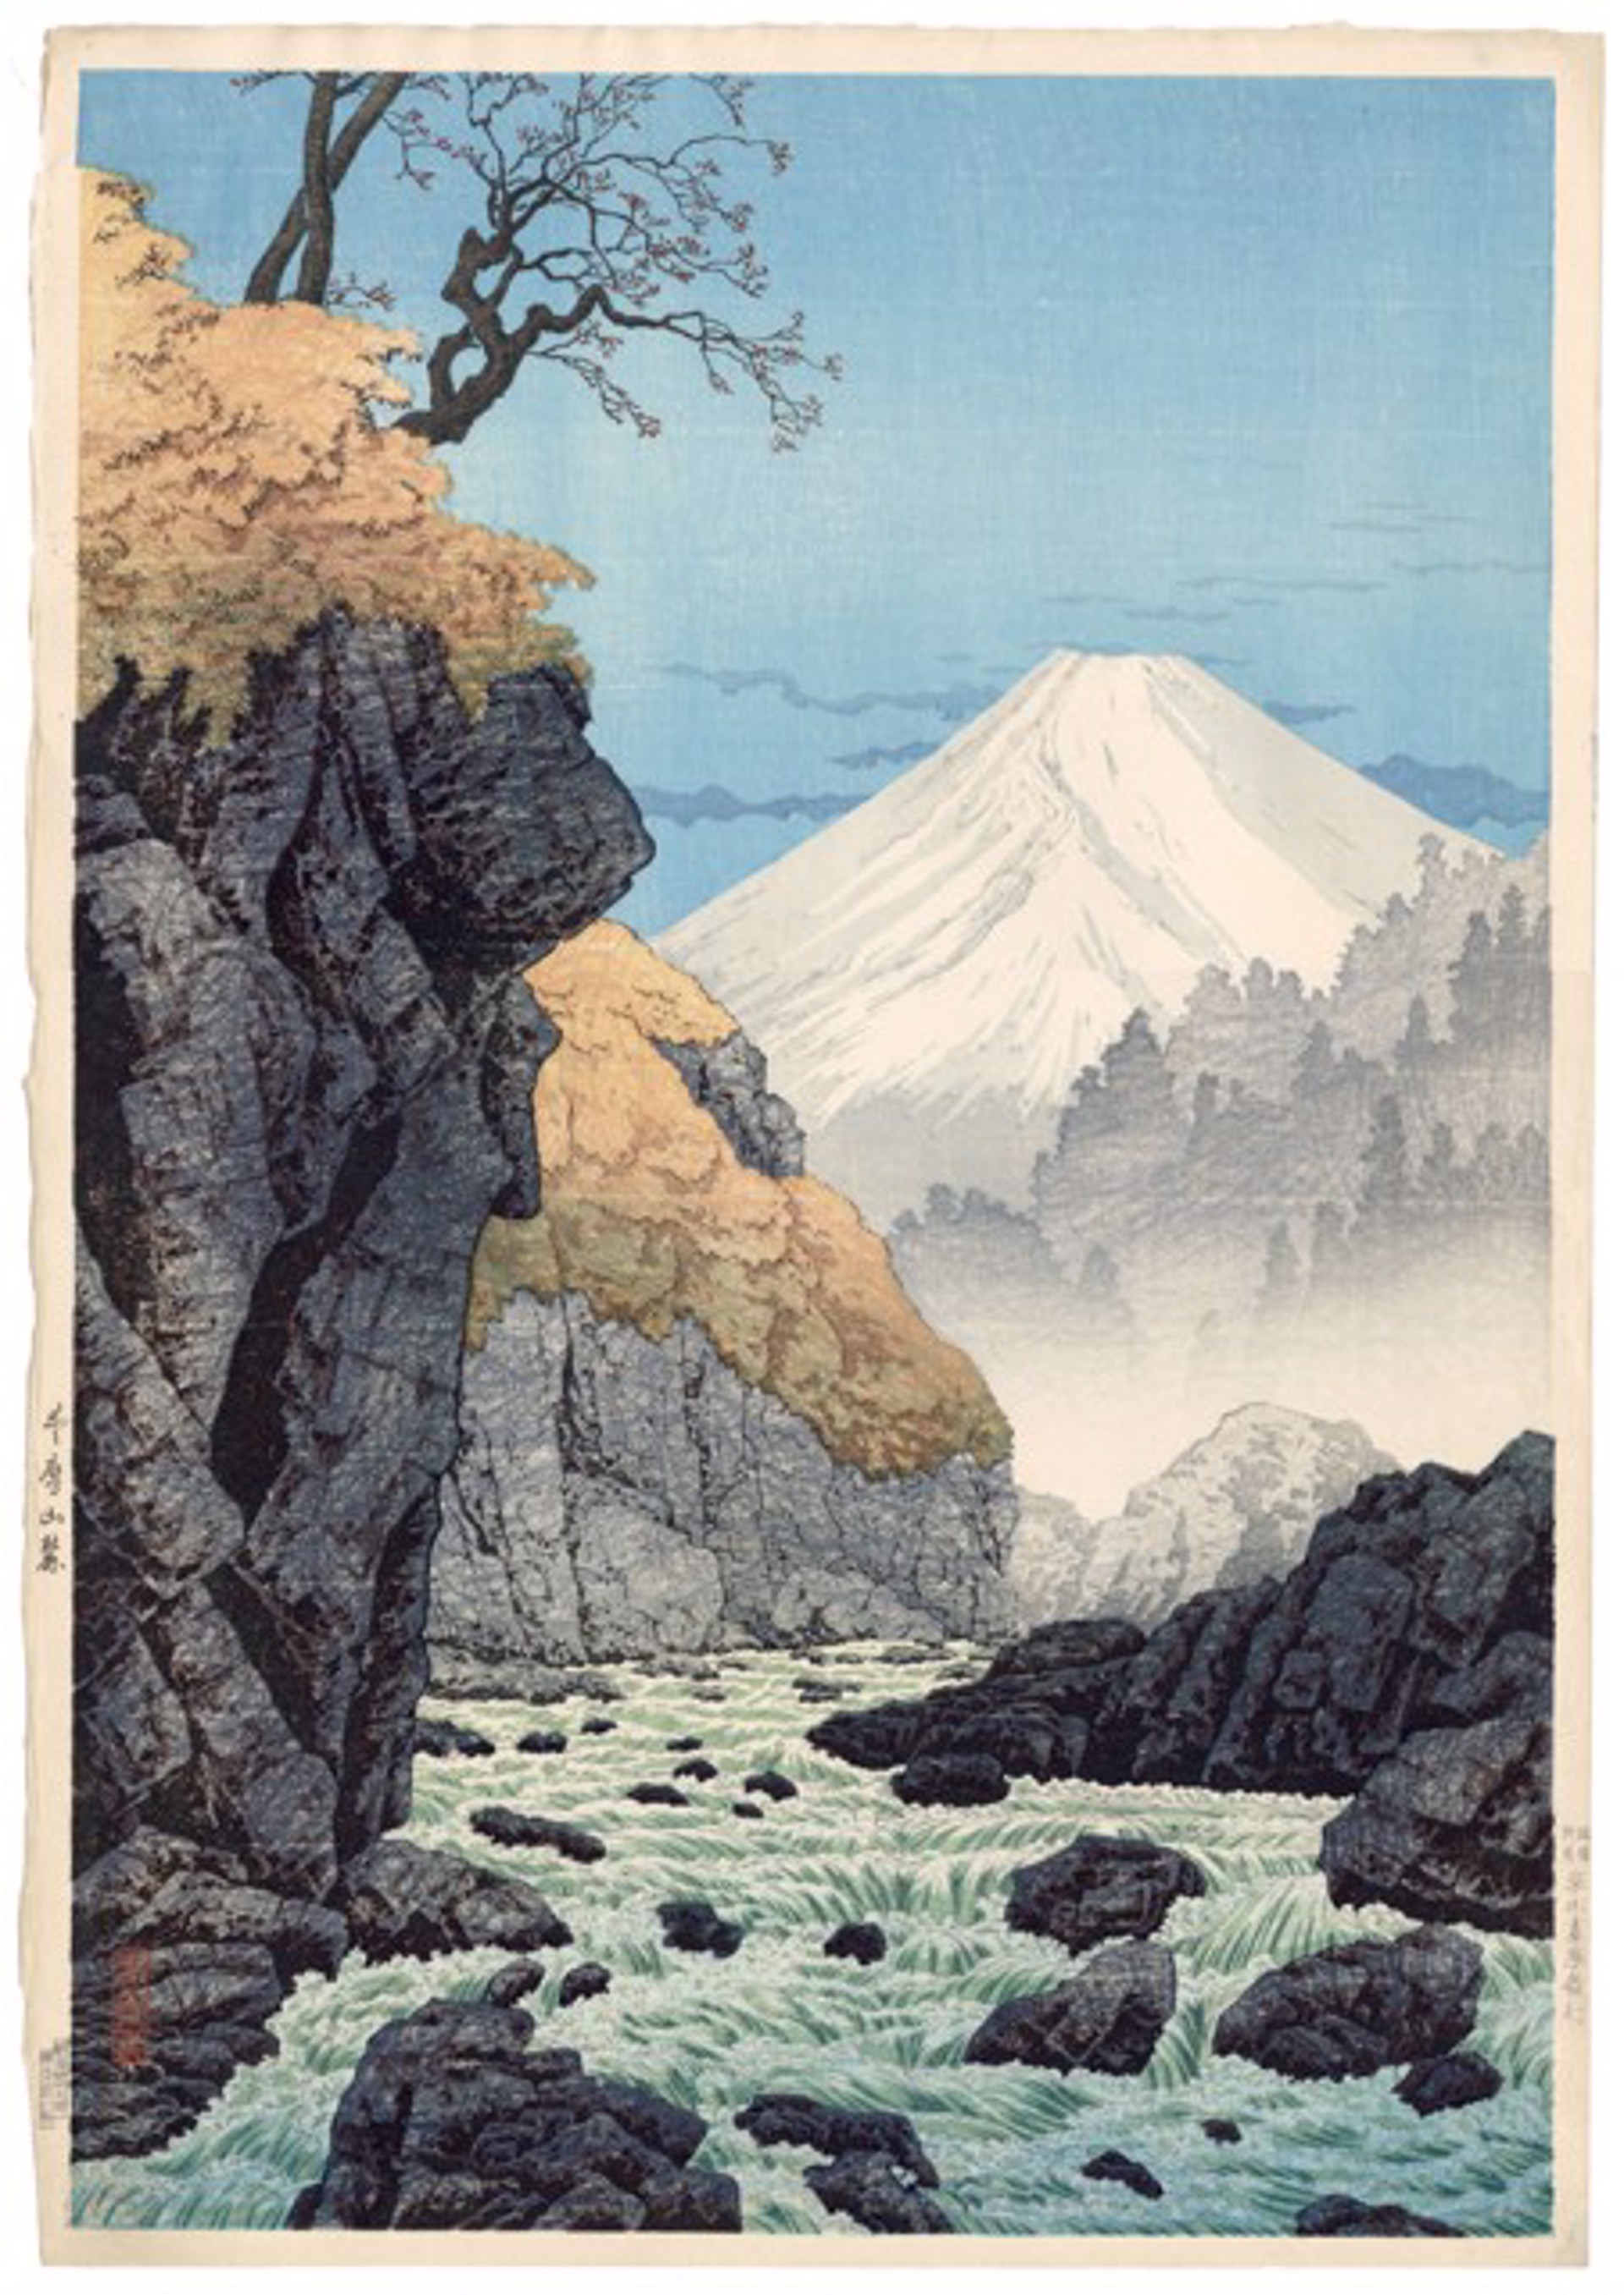 The Foothills of Mountains: Mt. Ashitaka, Autumn  91/100 by Takahashi Hiroaki